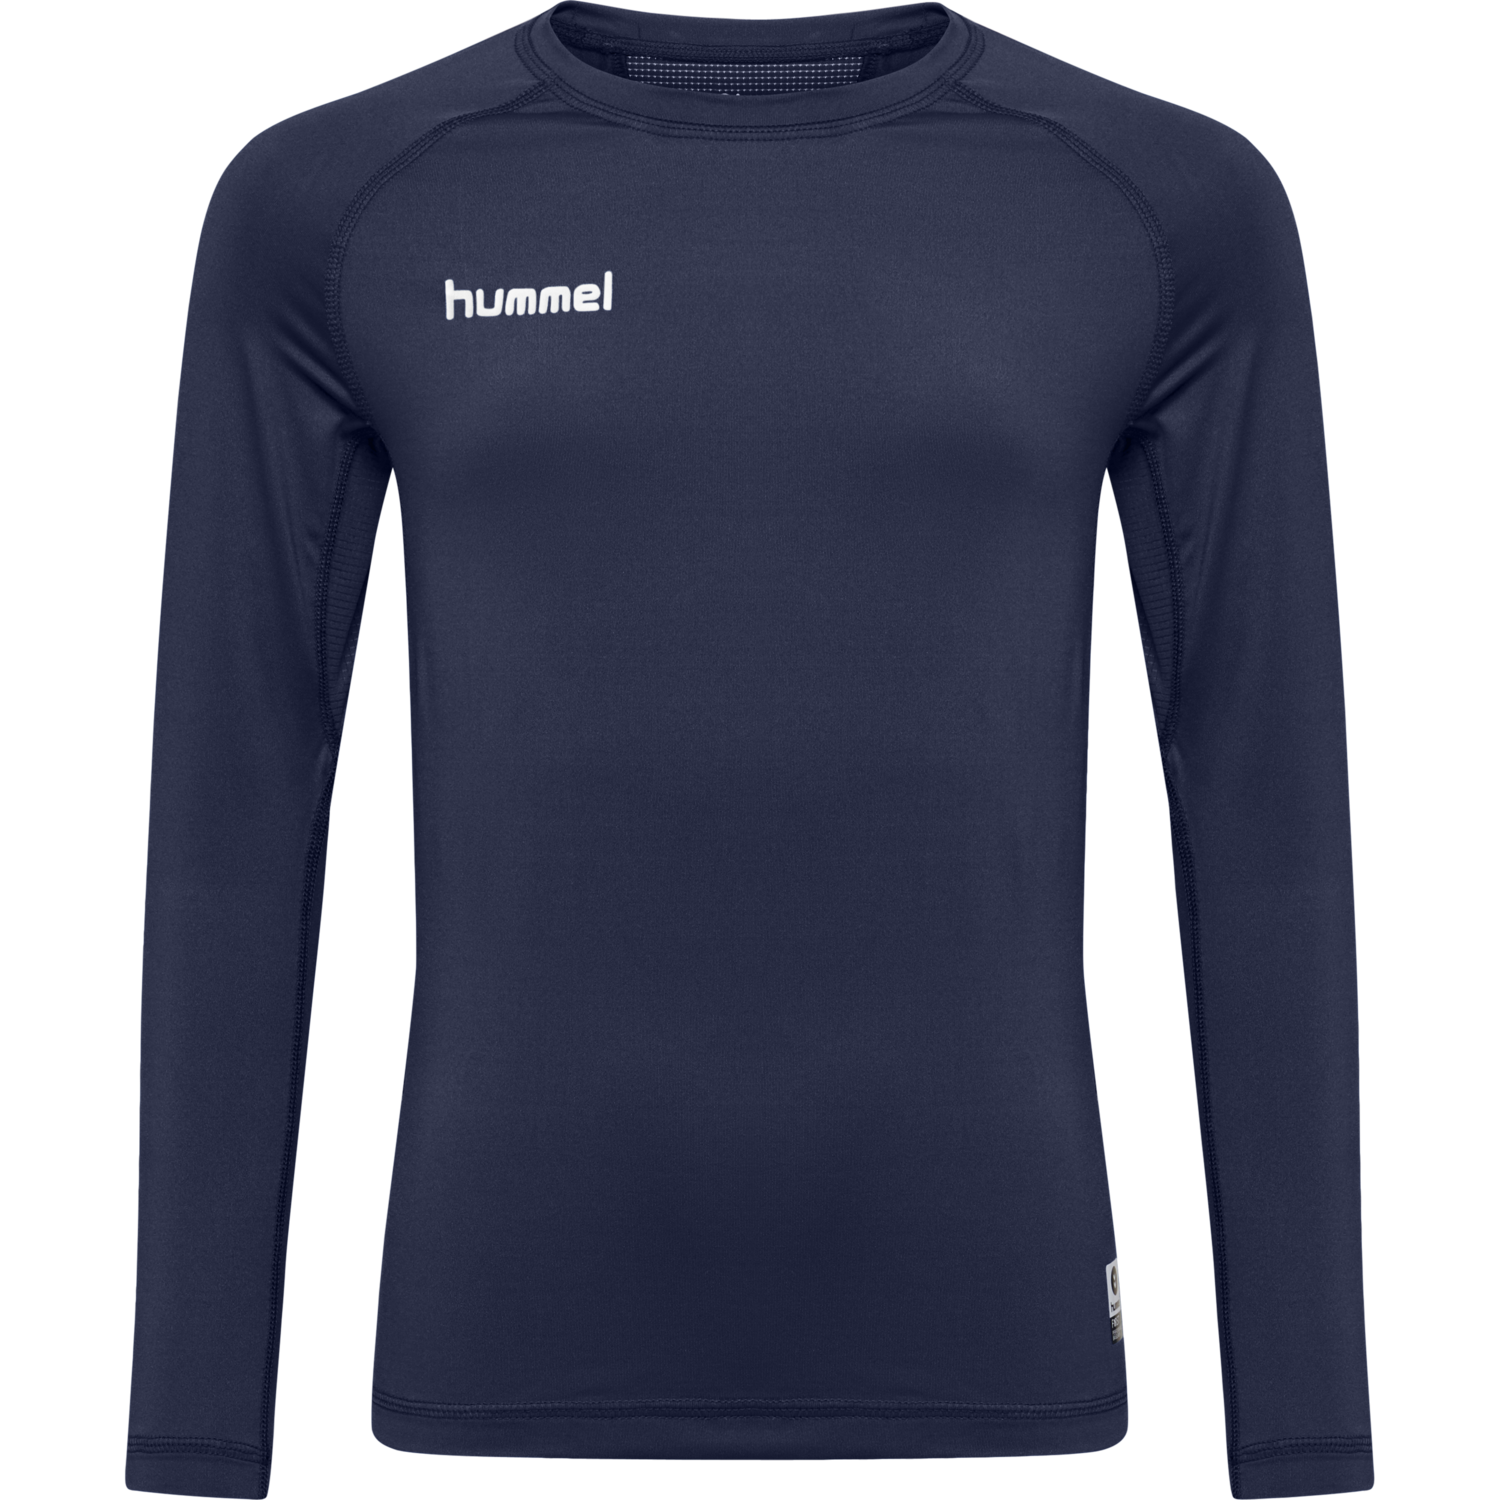 Details about   Hummel Performance Kids Sports Training Running Long Sleeve Jersey Shirt Marine 